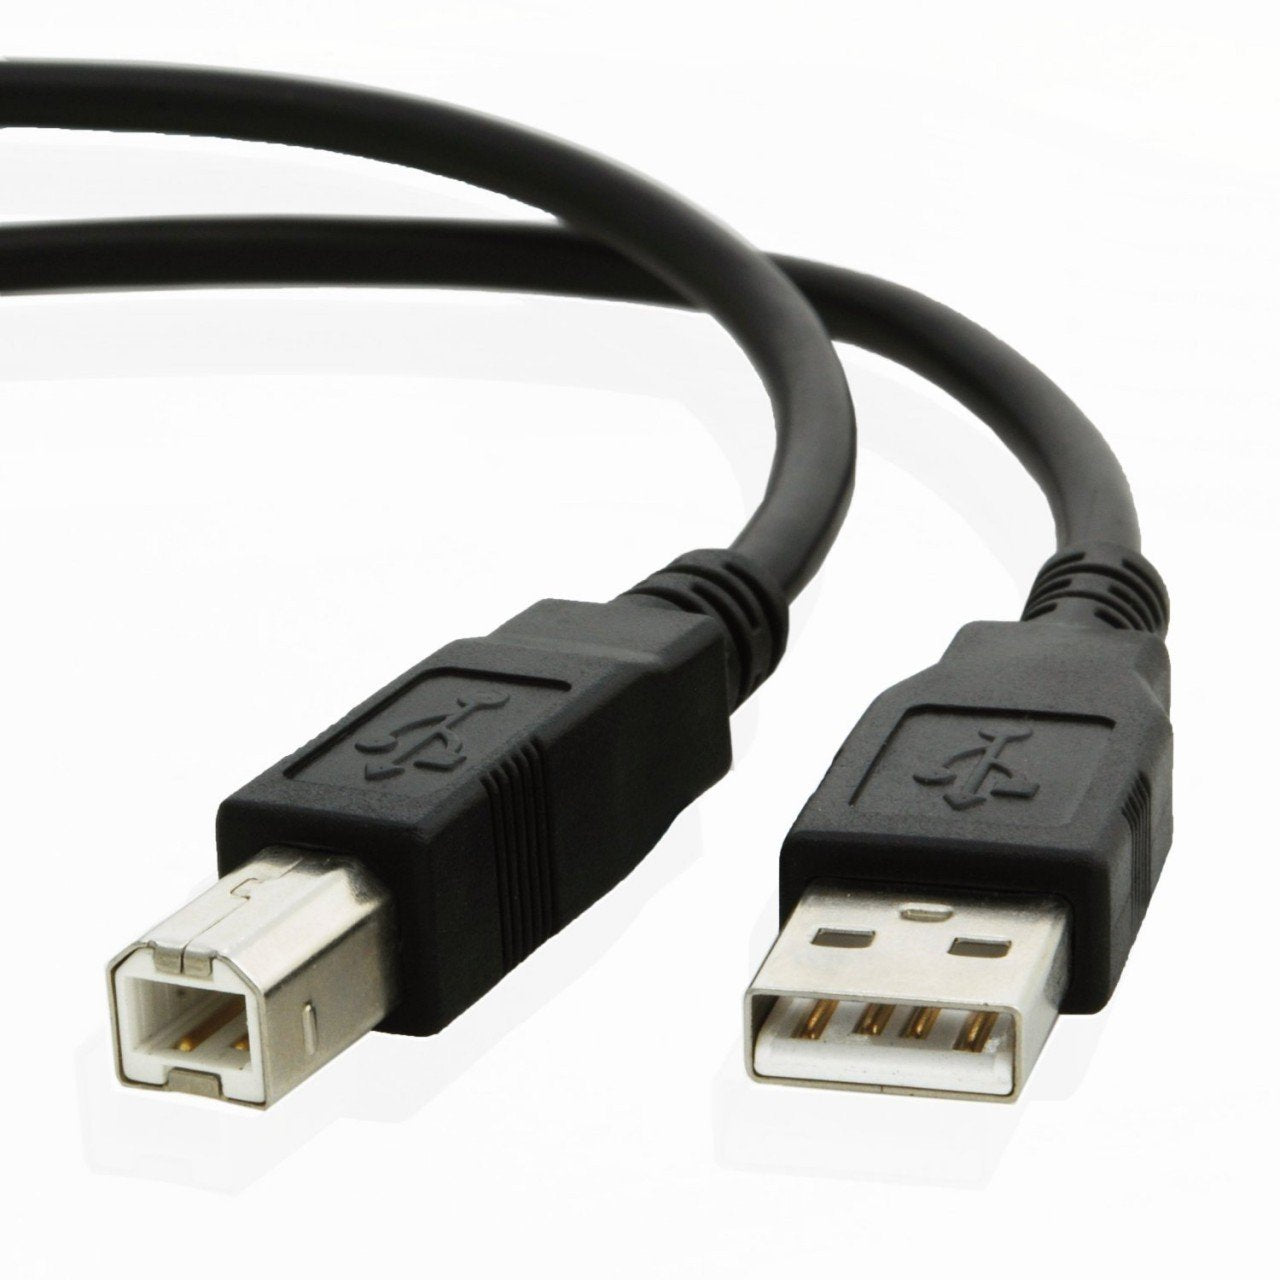 USB cable for Canon PIXMA MP980